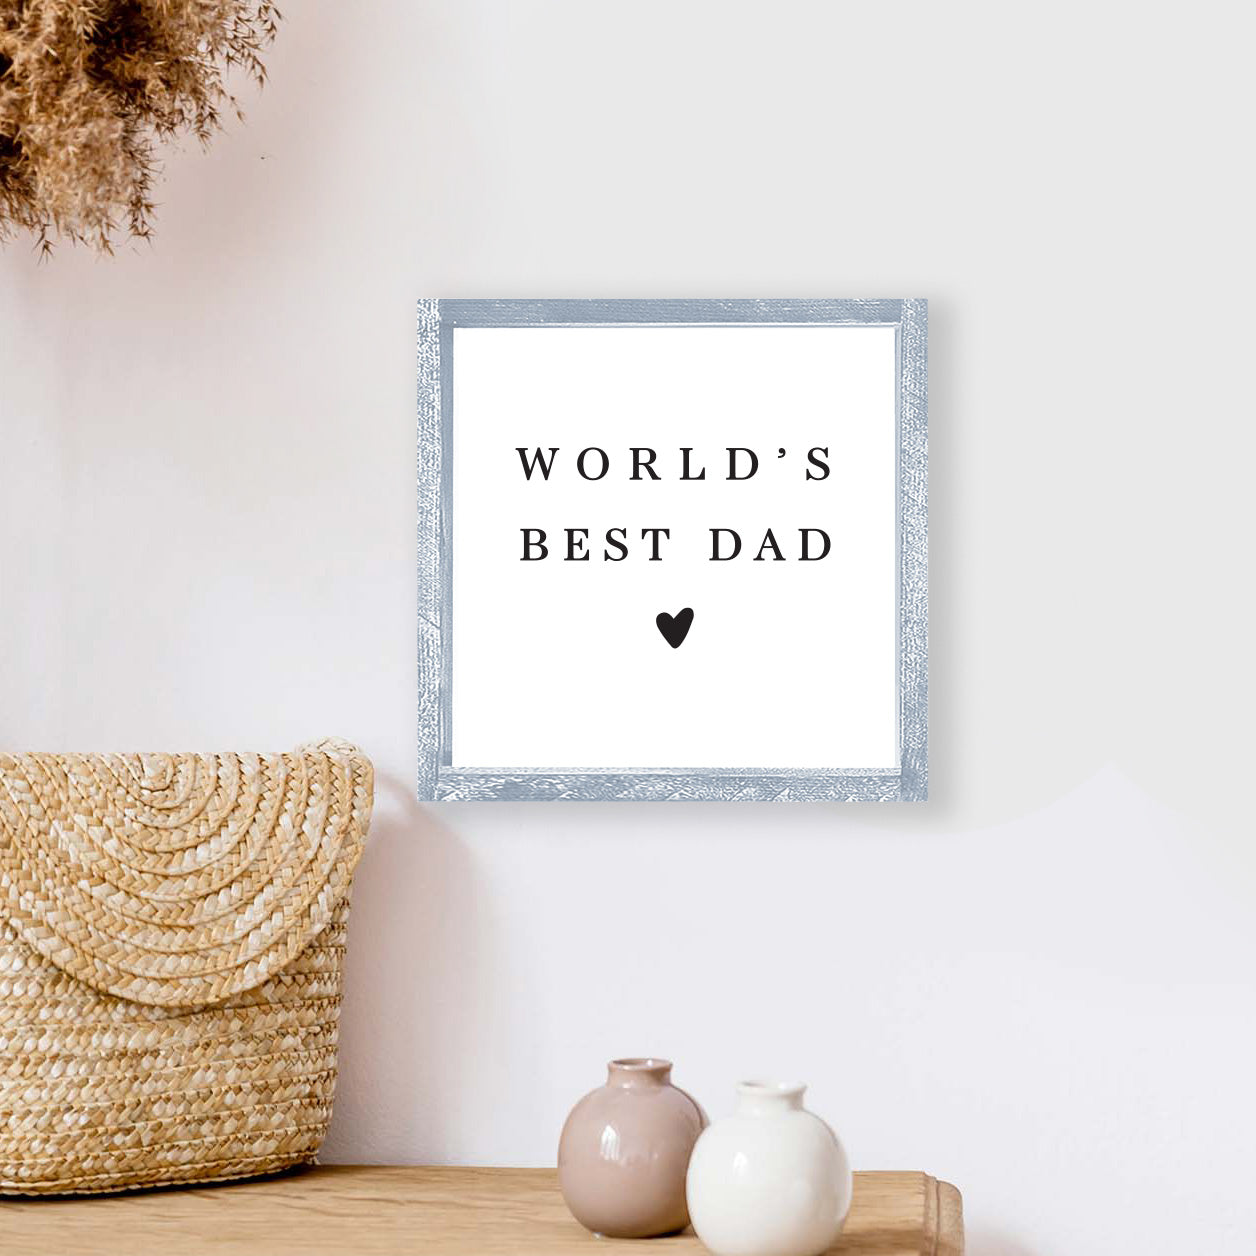 World's Best Dad Wood Sign